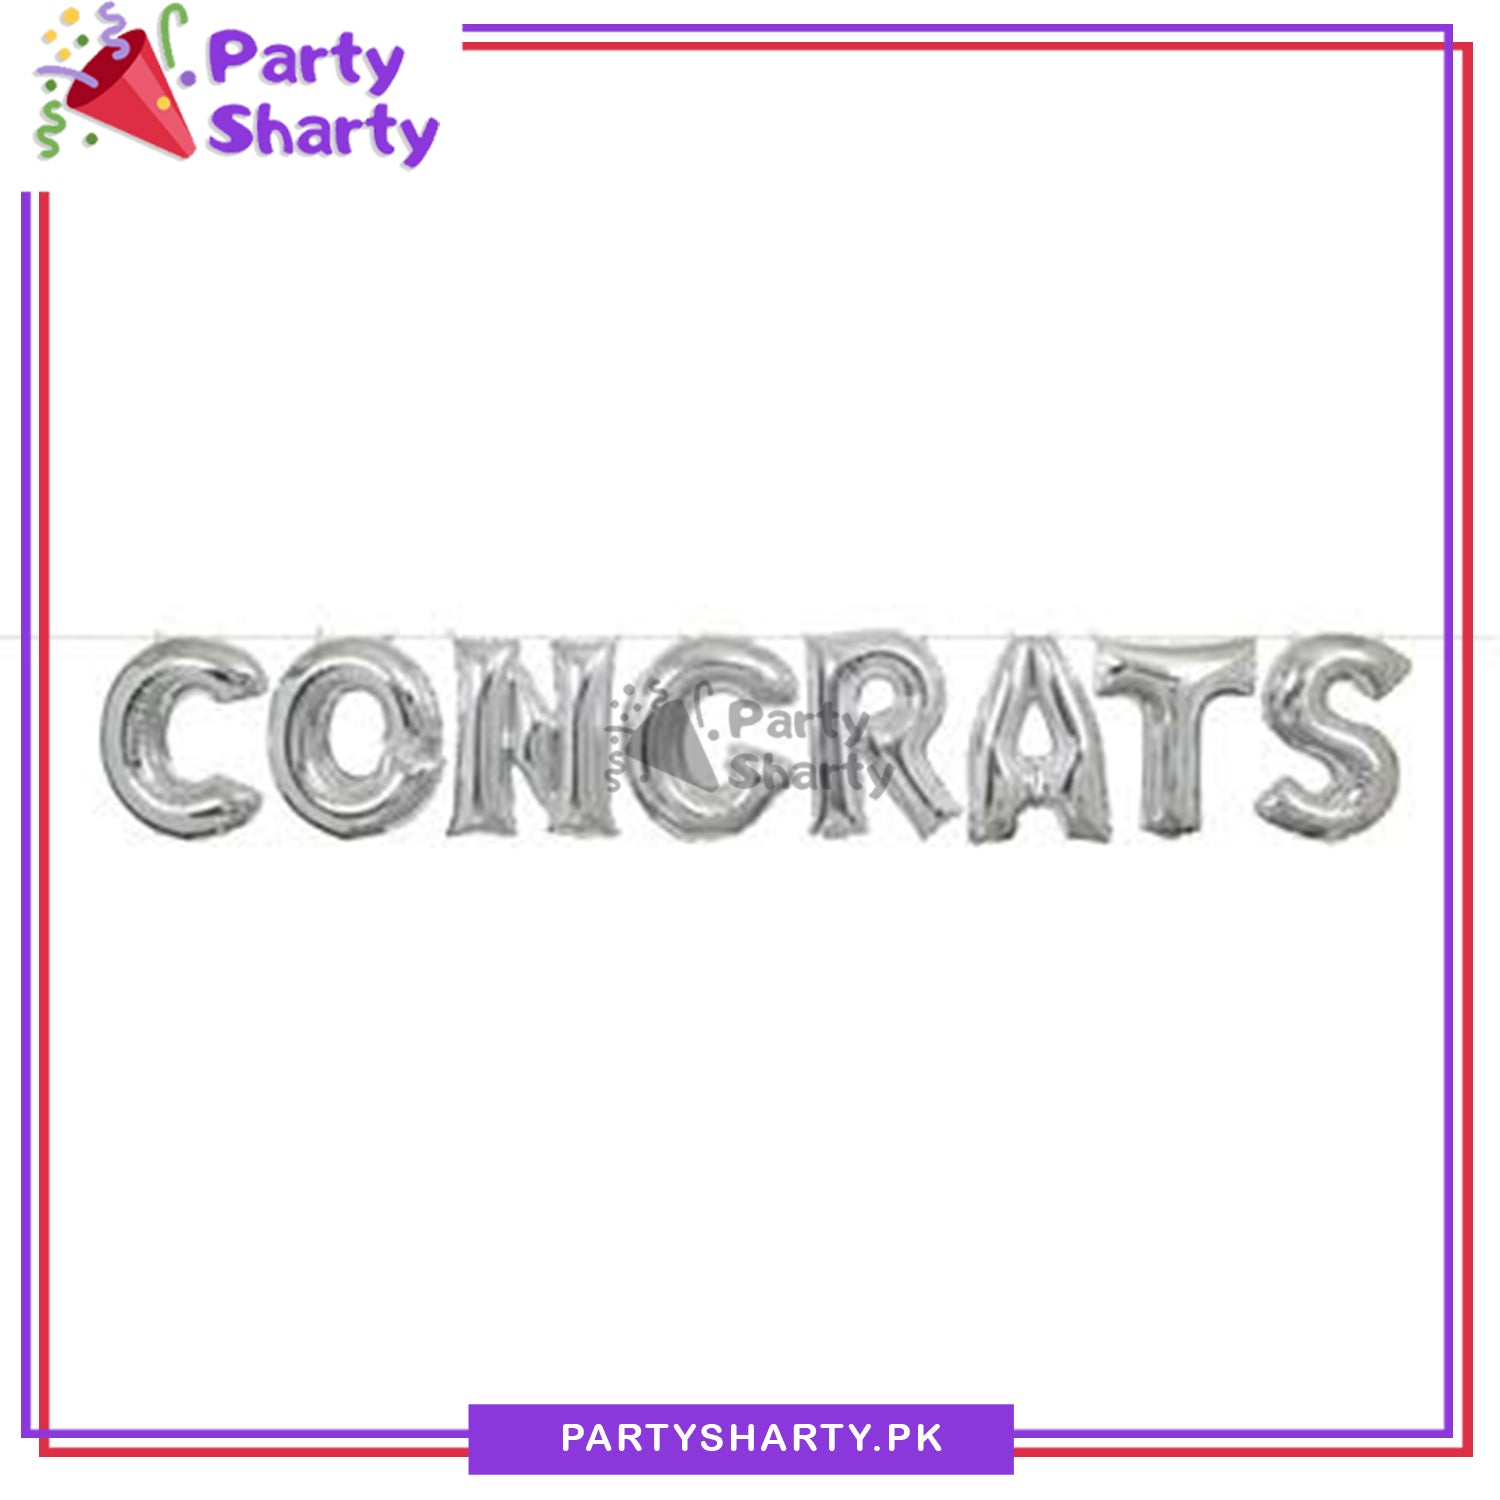 Congrats Letter Foil Balloon Banner For Graduation Party Decoration and Celebration